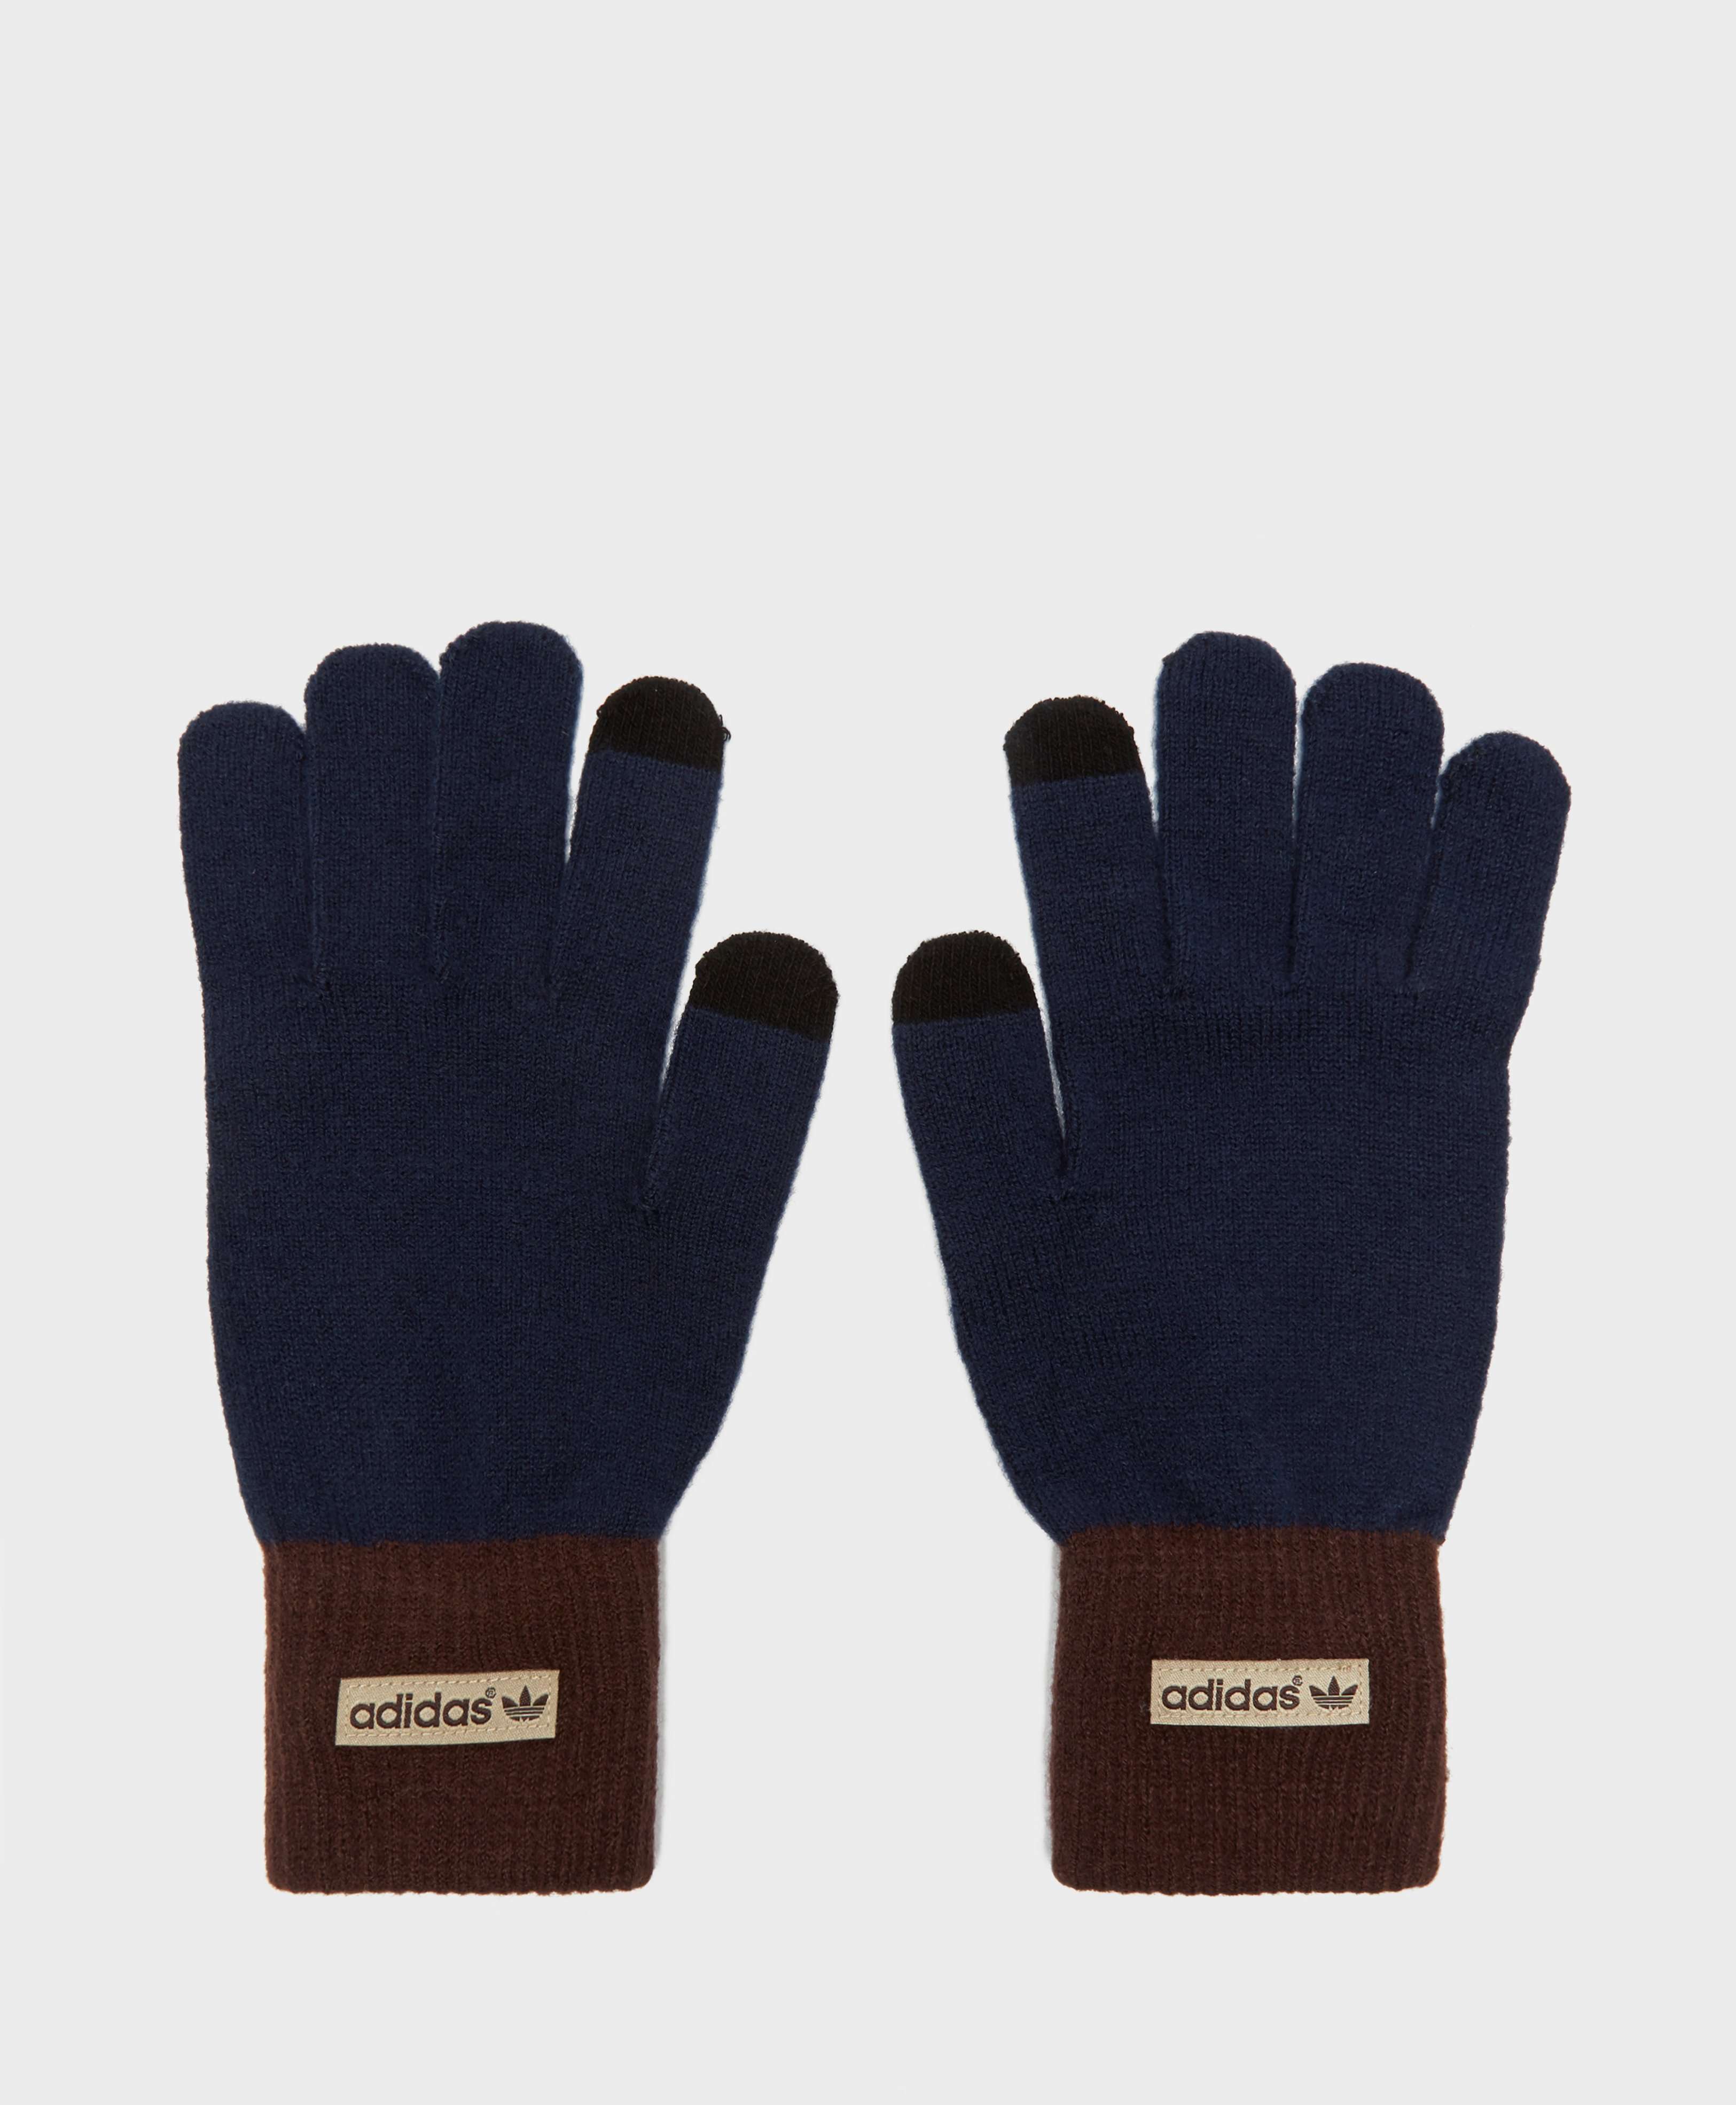 adidas Originals Smart Gloves | scotts Menswear